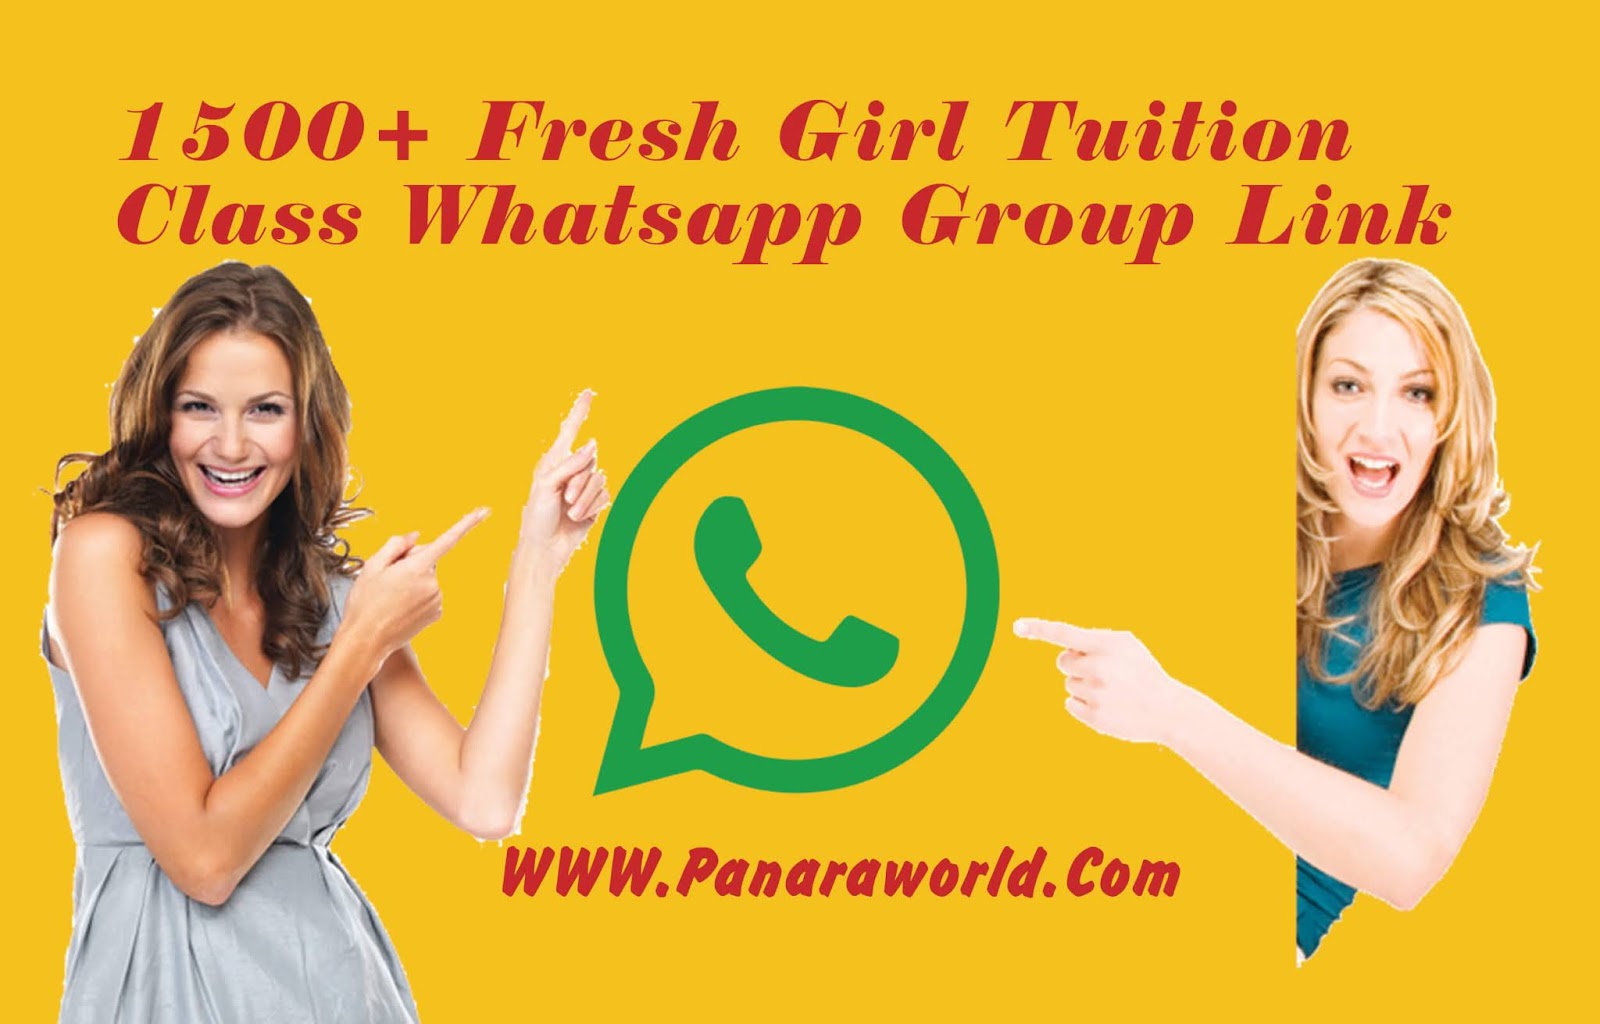 Tuition Class Fuck - 1500+ Fresh Girl Tuition Class Whatsapp Group Link - Panaraworld ...